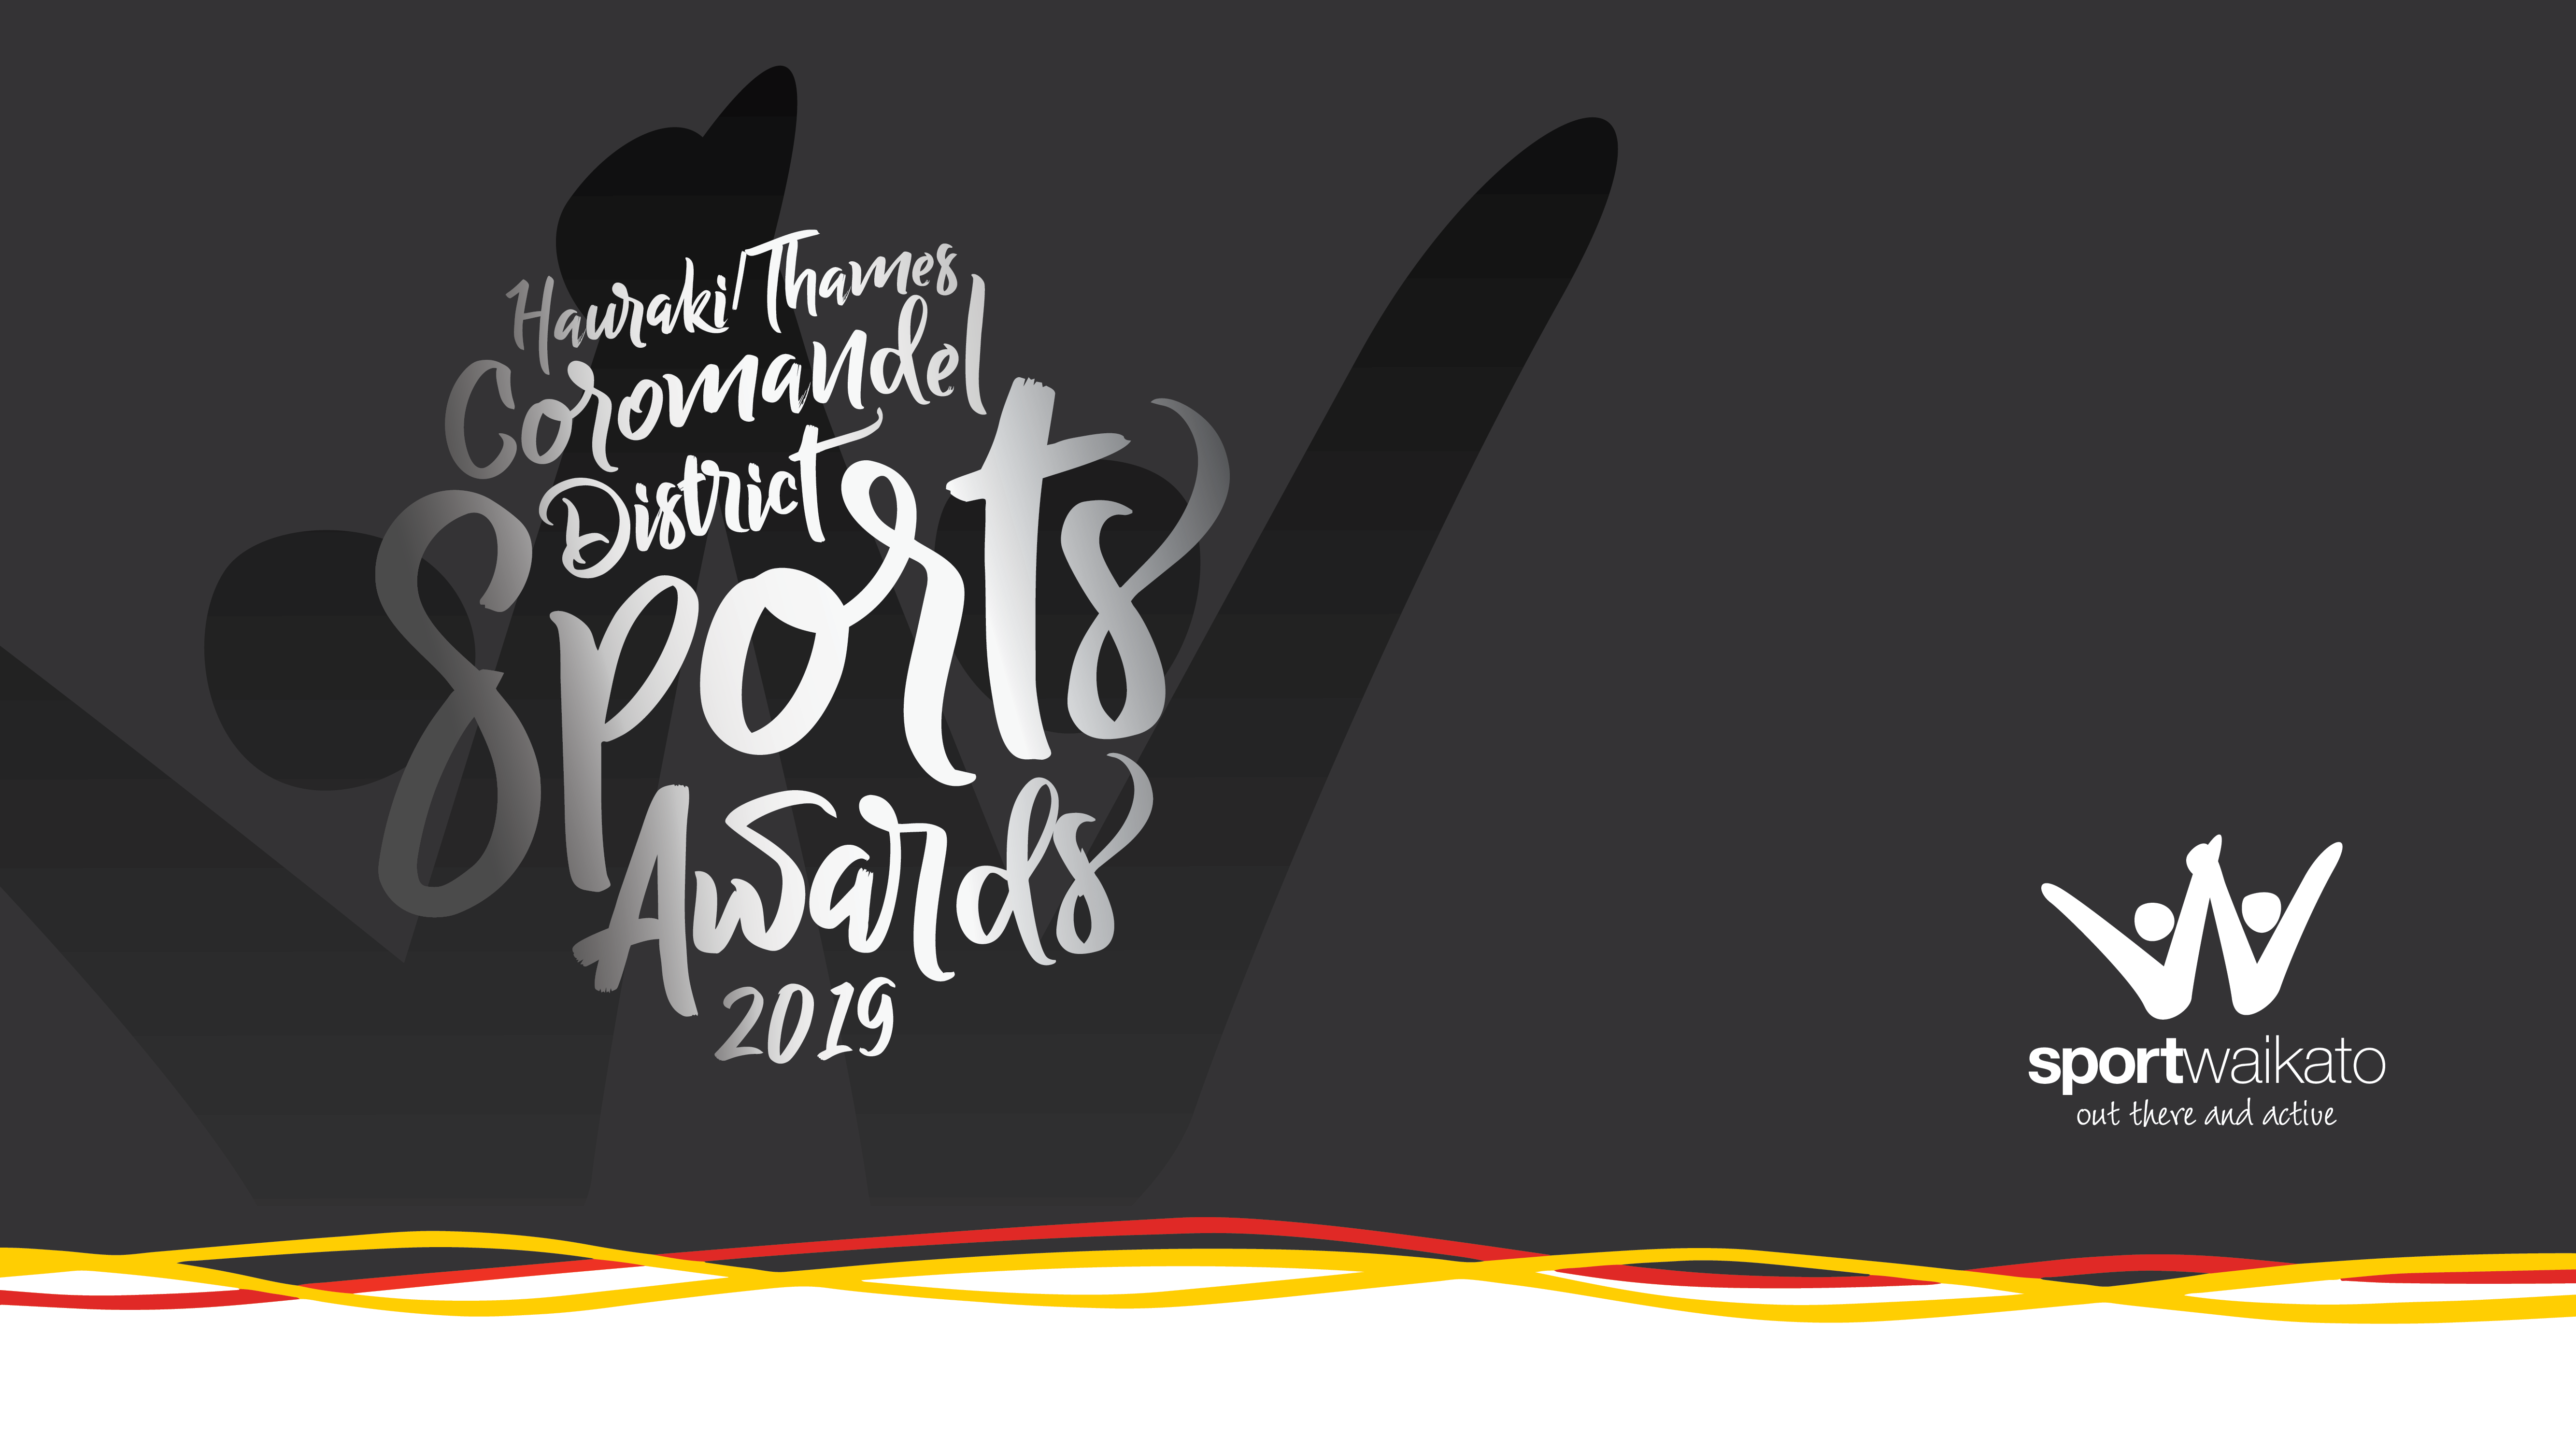 Hauraki/Thames Coromandel District Sports Awards 2019 nominations are in!